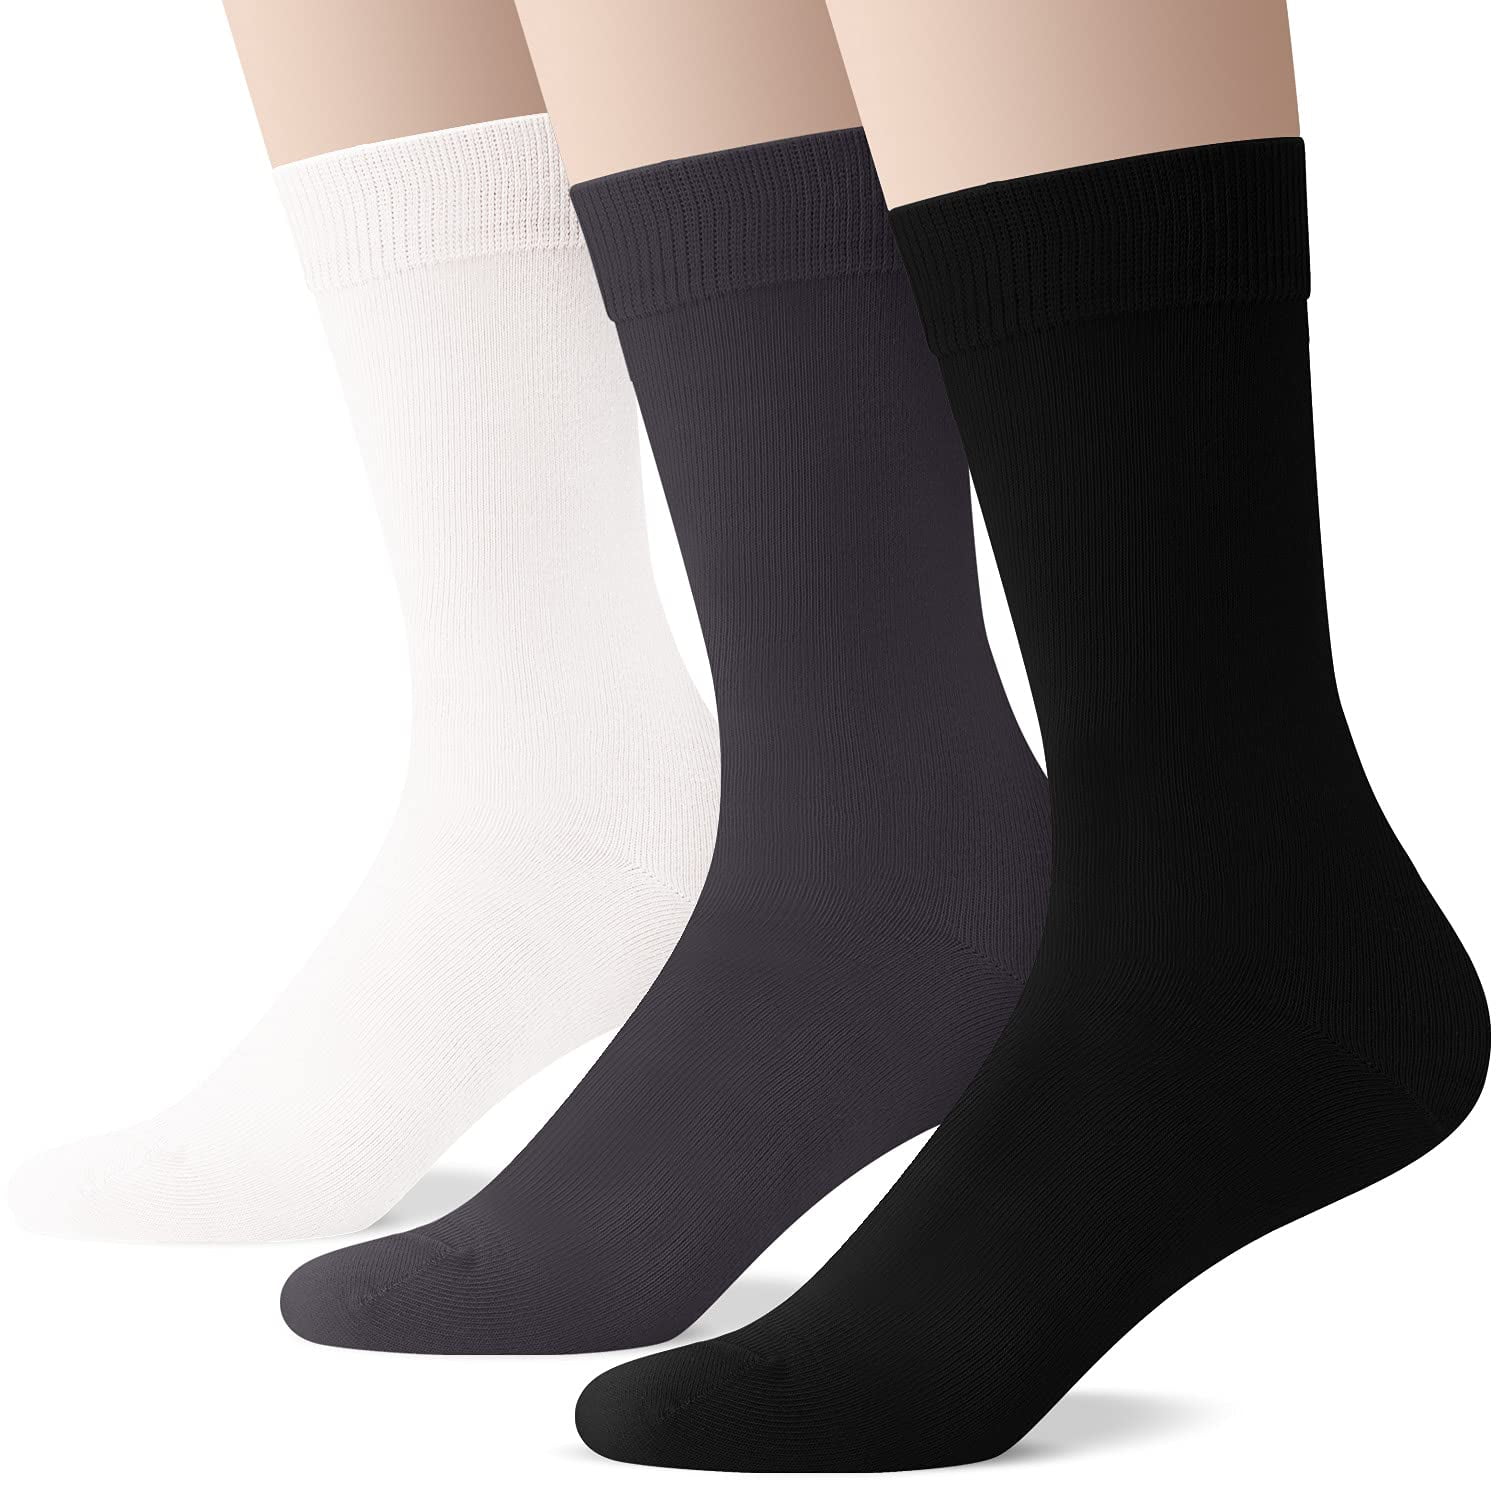 Aiyino Lightweight Soft Cotton Thin Dress Socks Crew Business Casual, 3 ...